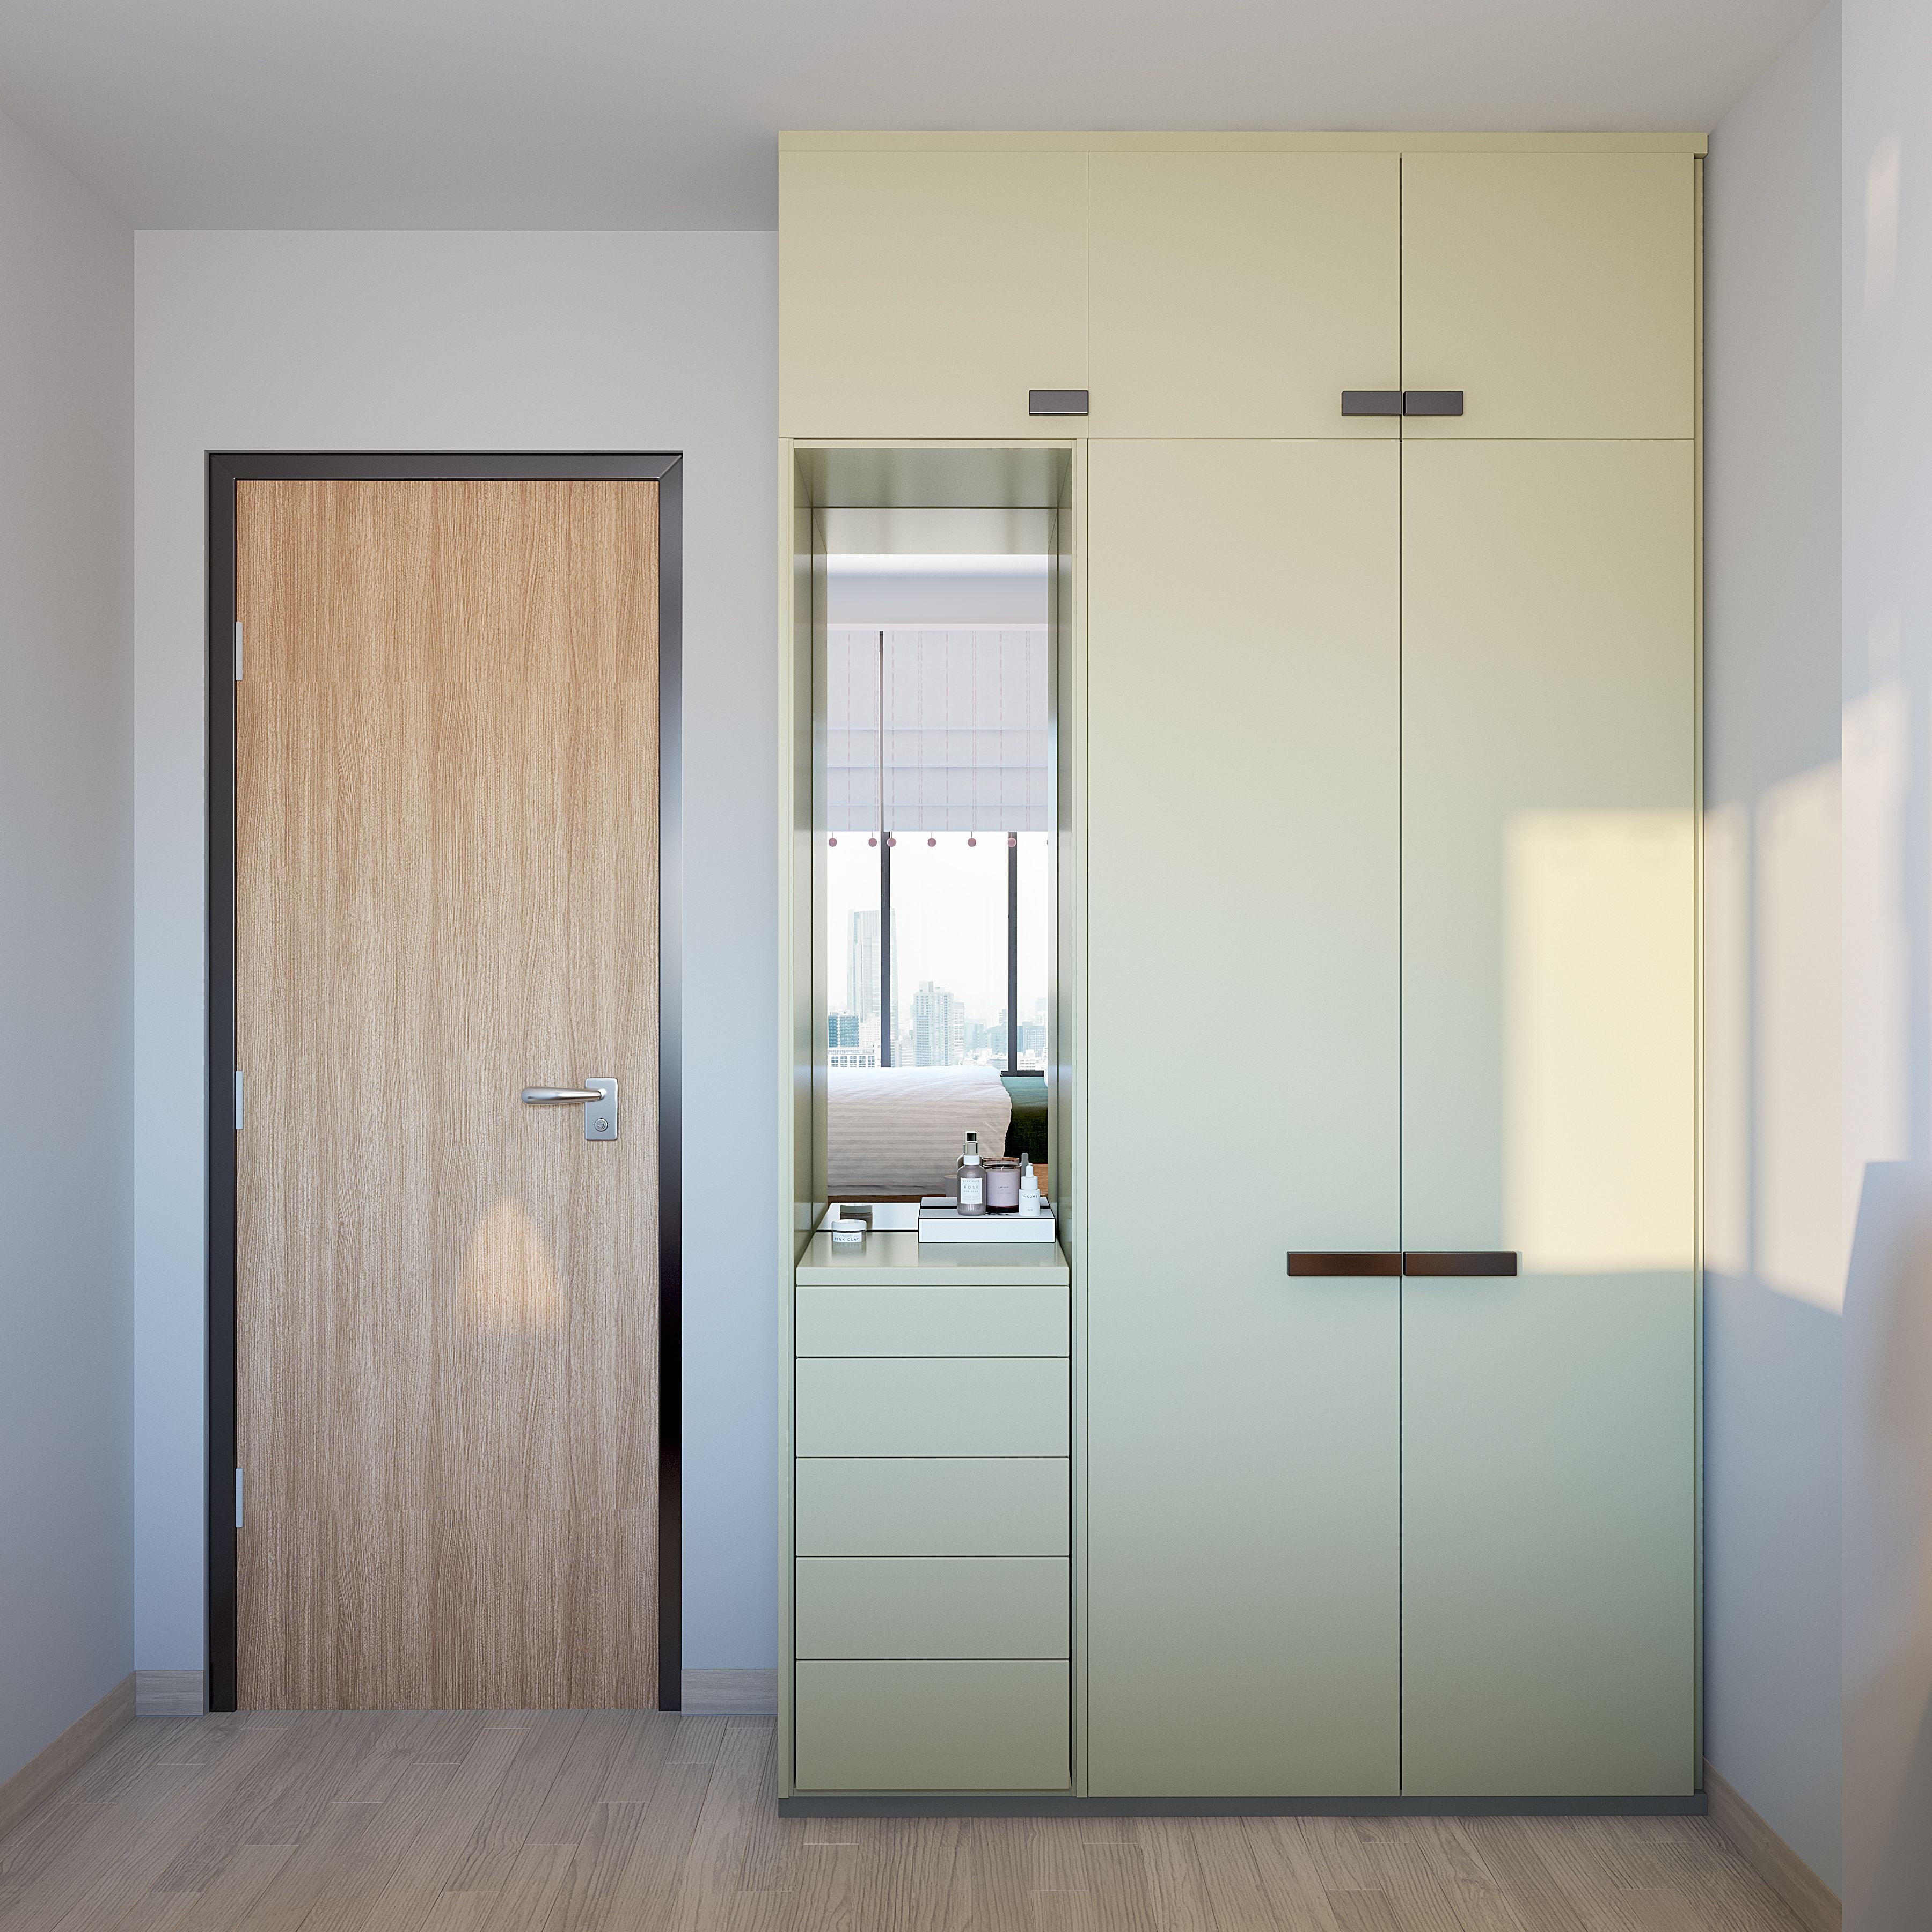 2-Door Modern Wardrobe Design With Dresser and Drawers